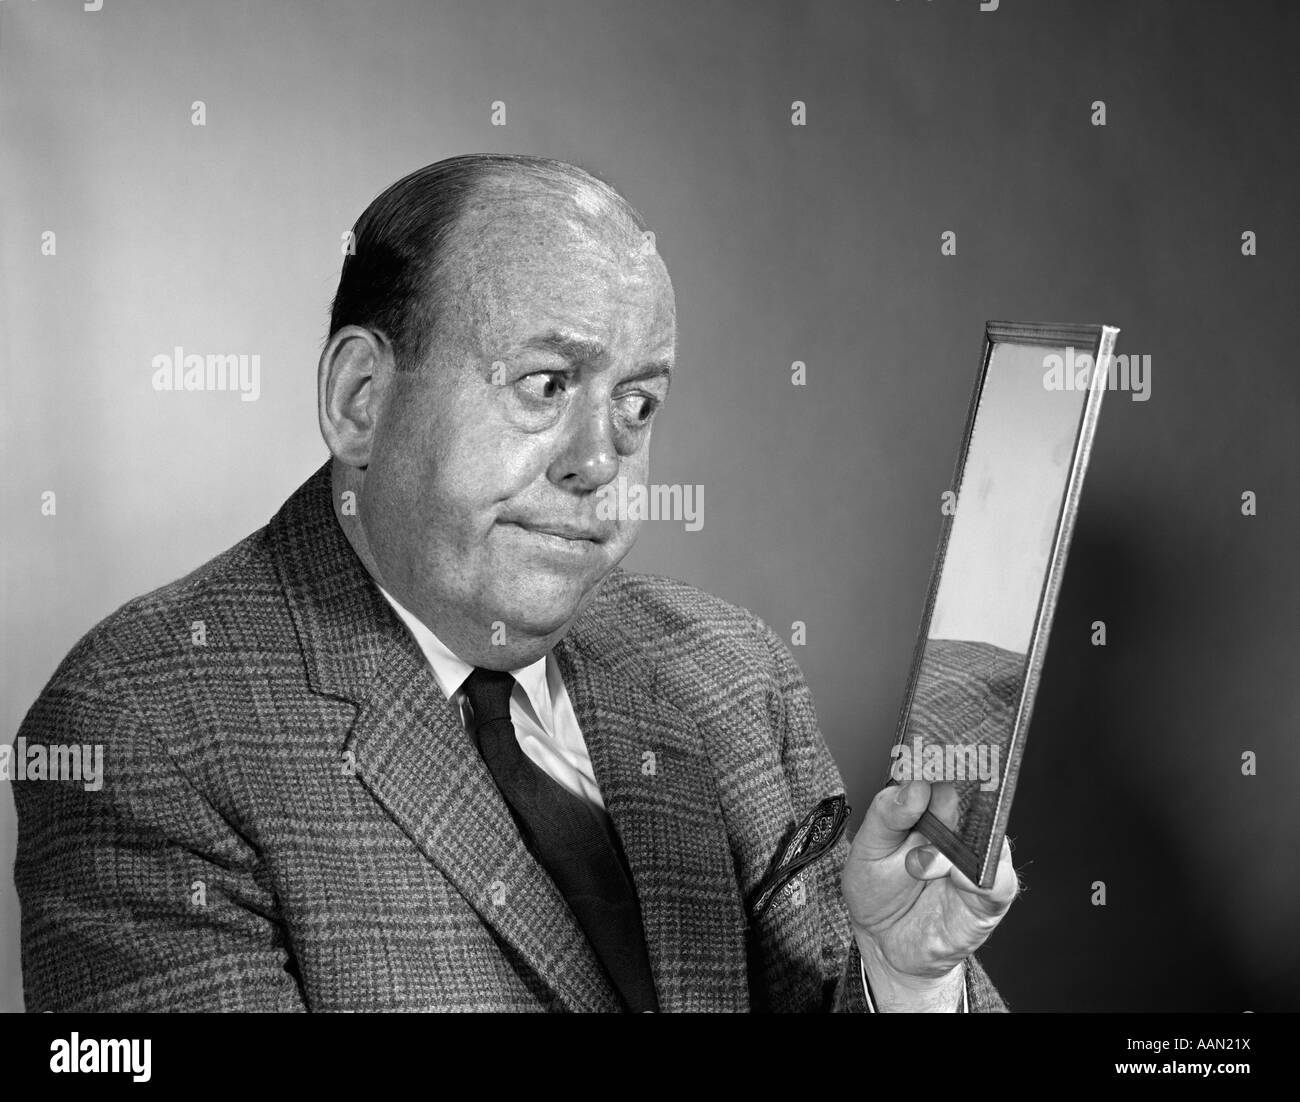 1960s PORTRAIT OF BALDING MAN LOOKING INTO MIRROR Stock Photo